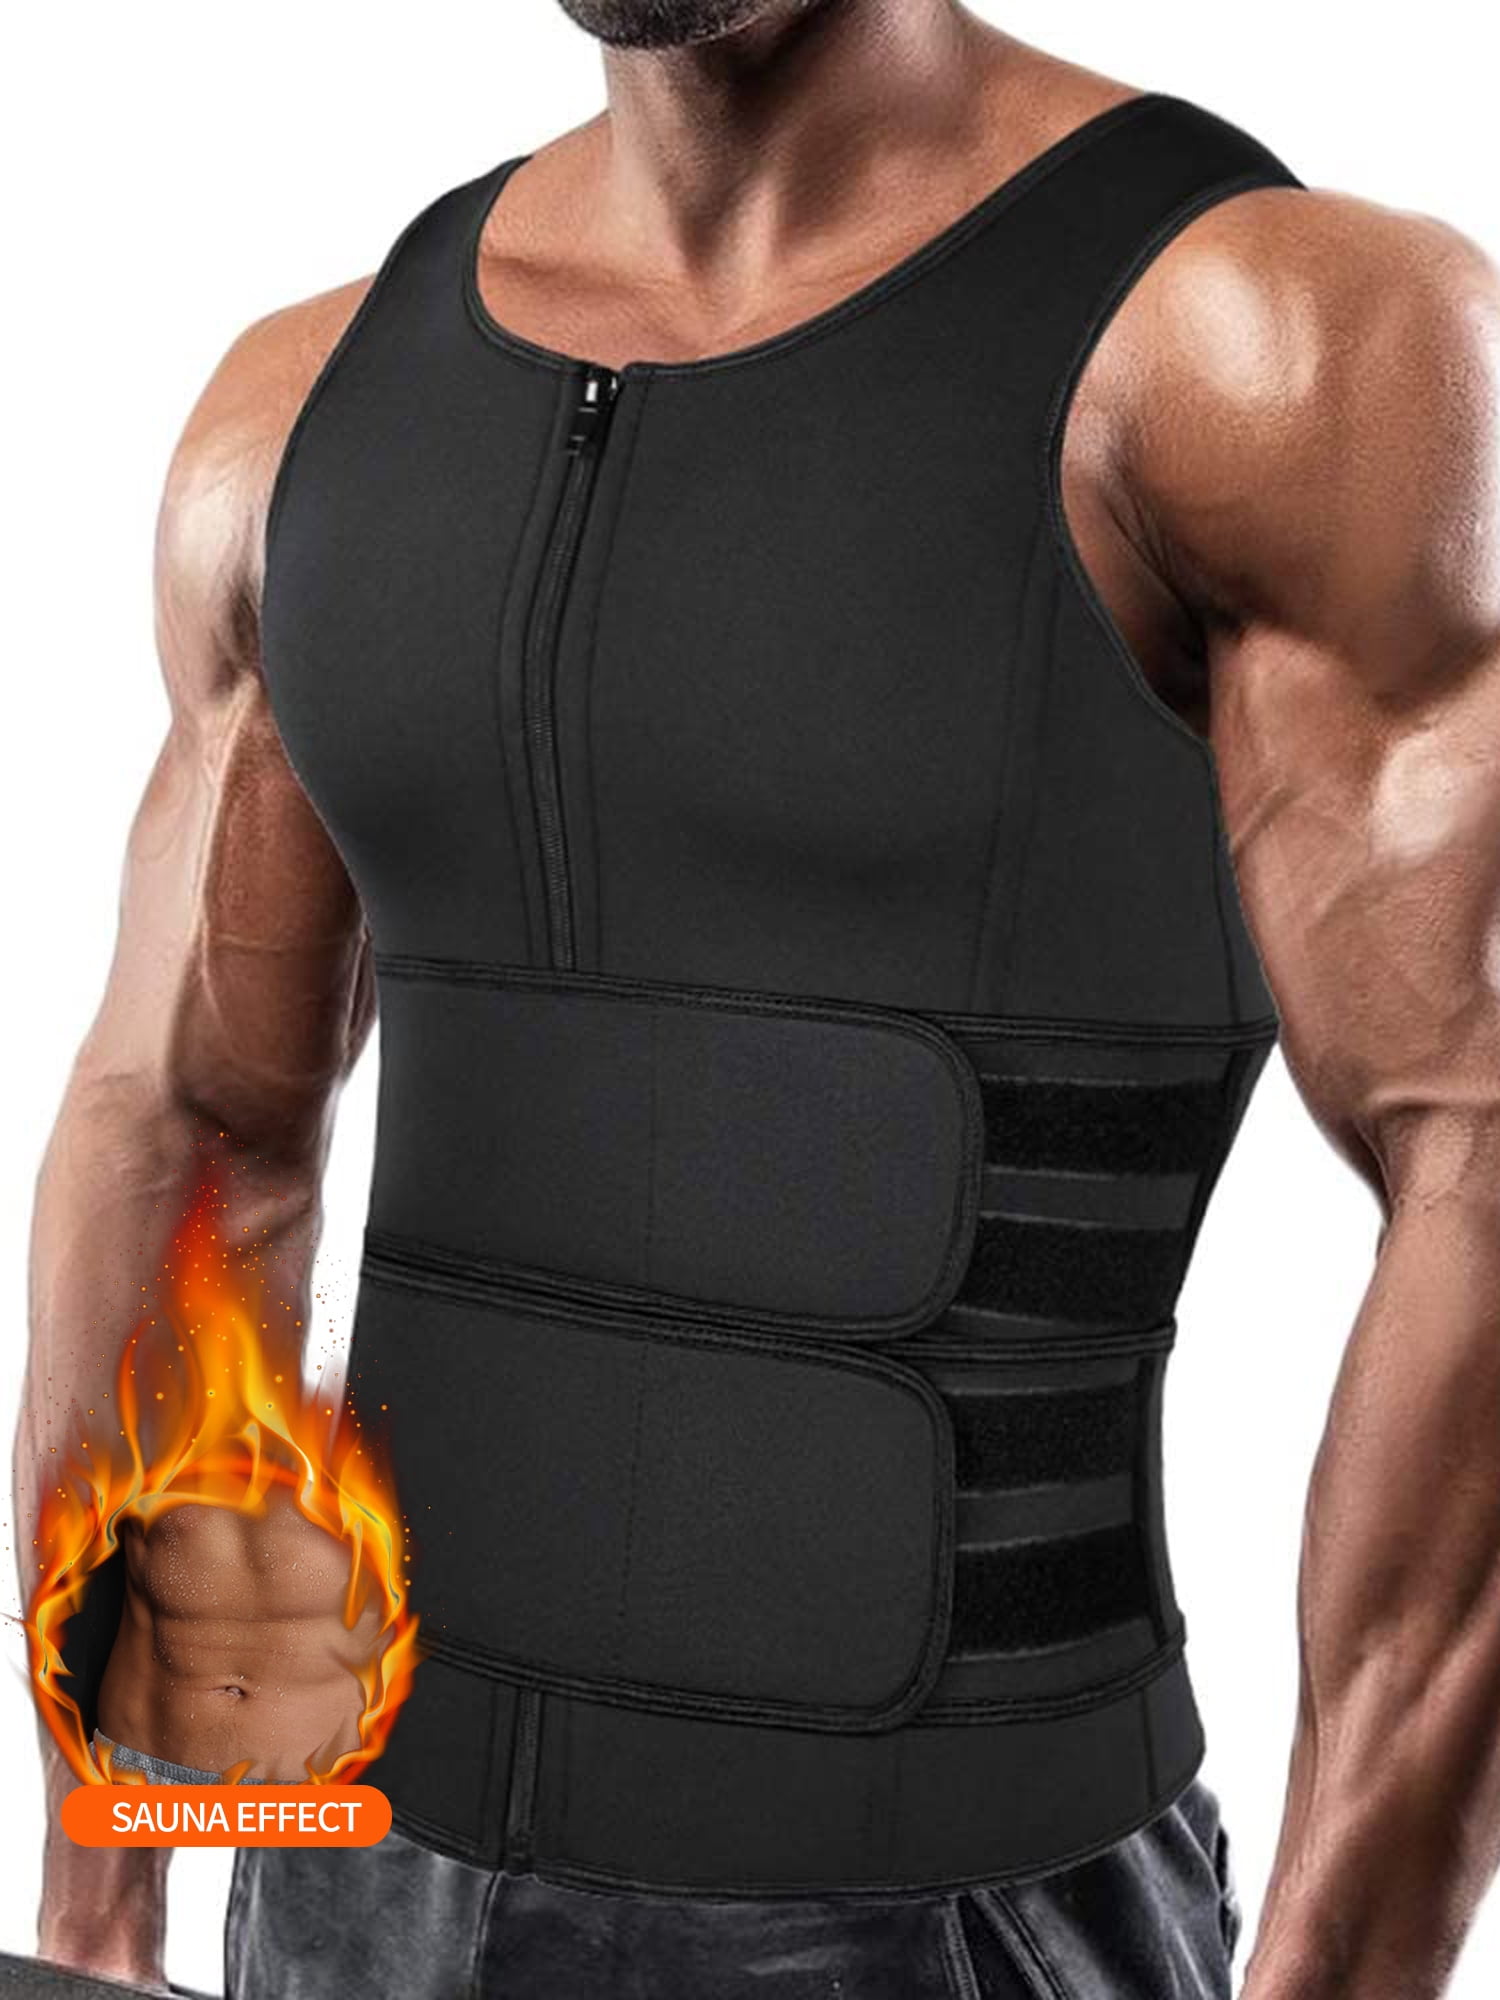 Sauna Suit Tank Top for Men Workout Vest Gym Shirt Shaper Neoprene Help Sweat 